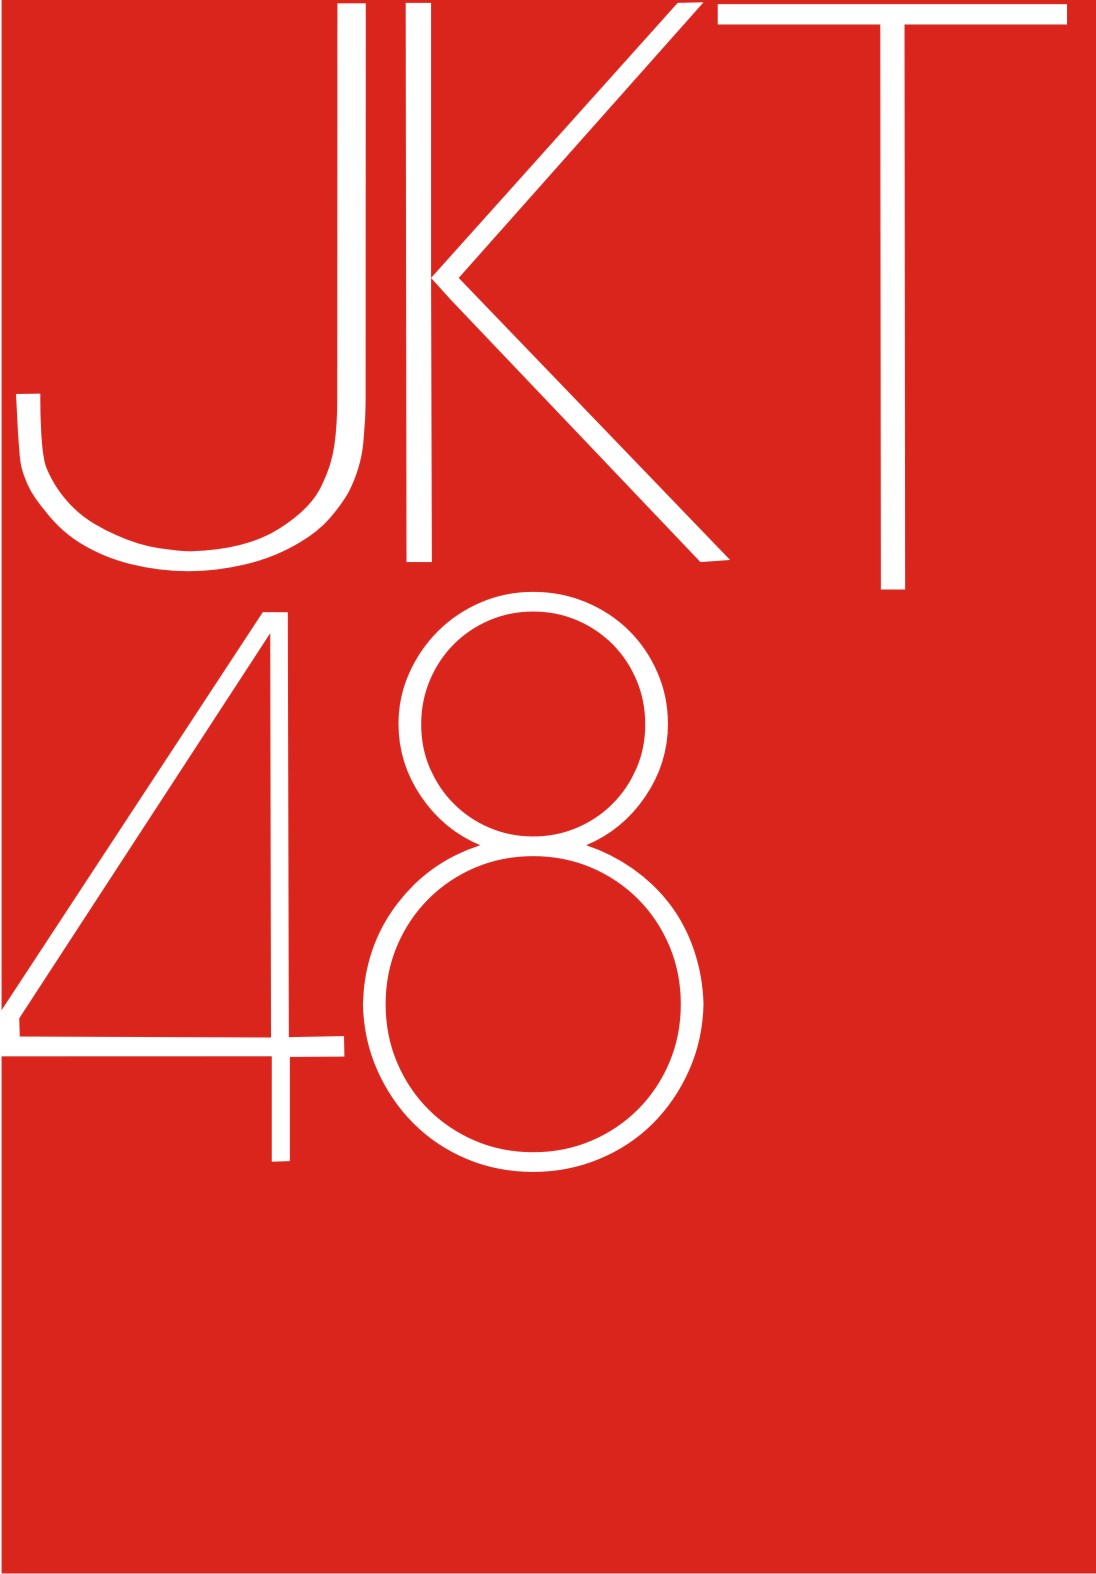 Download vektor logo jkt48 !! (FREE) TUMINI BLOG